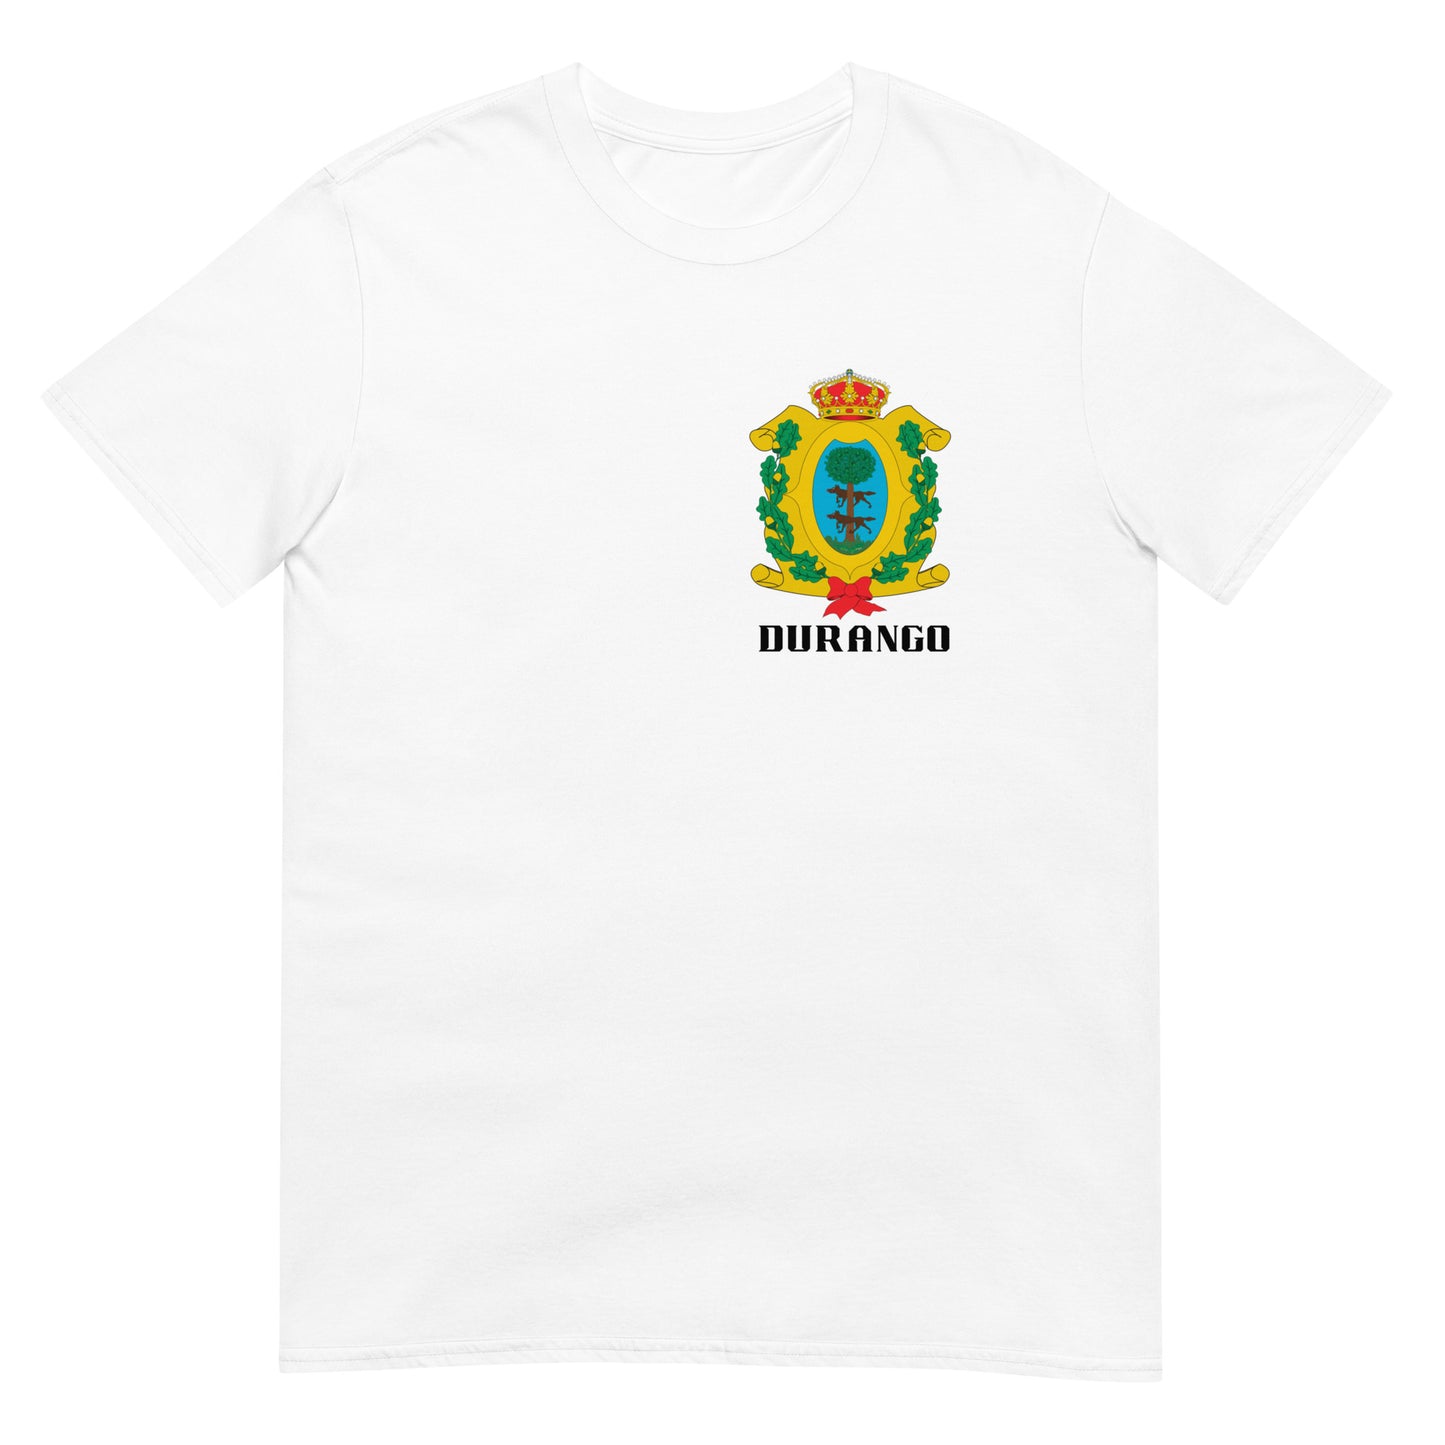 Durango- T-Shirt